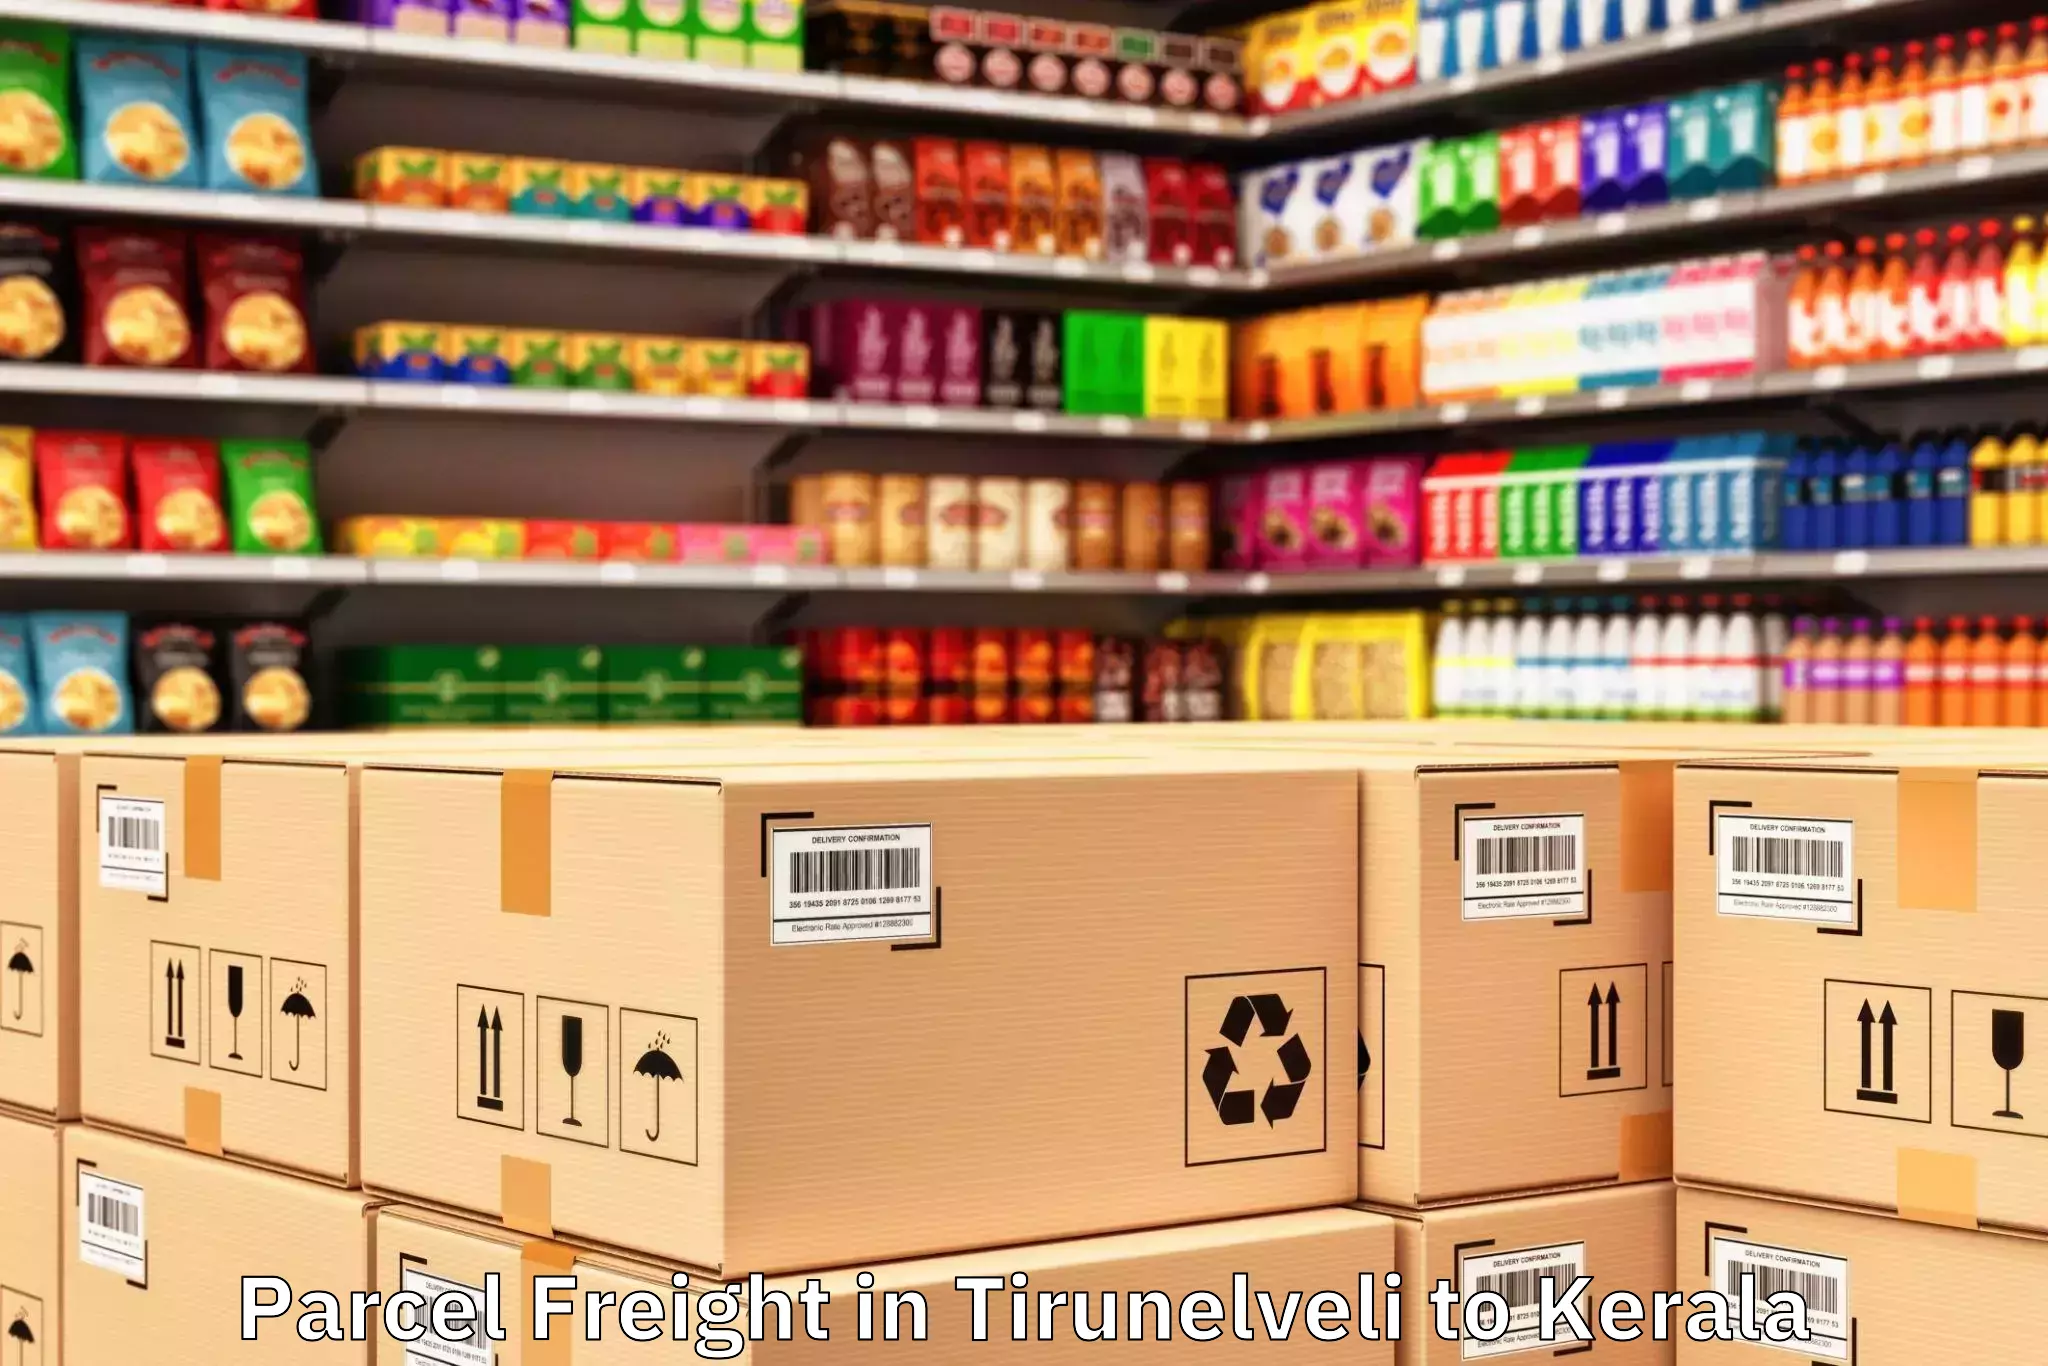 Professional Tirunelveli to Kollam Parcel Freight